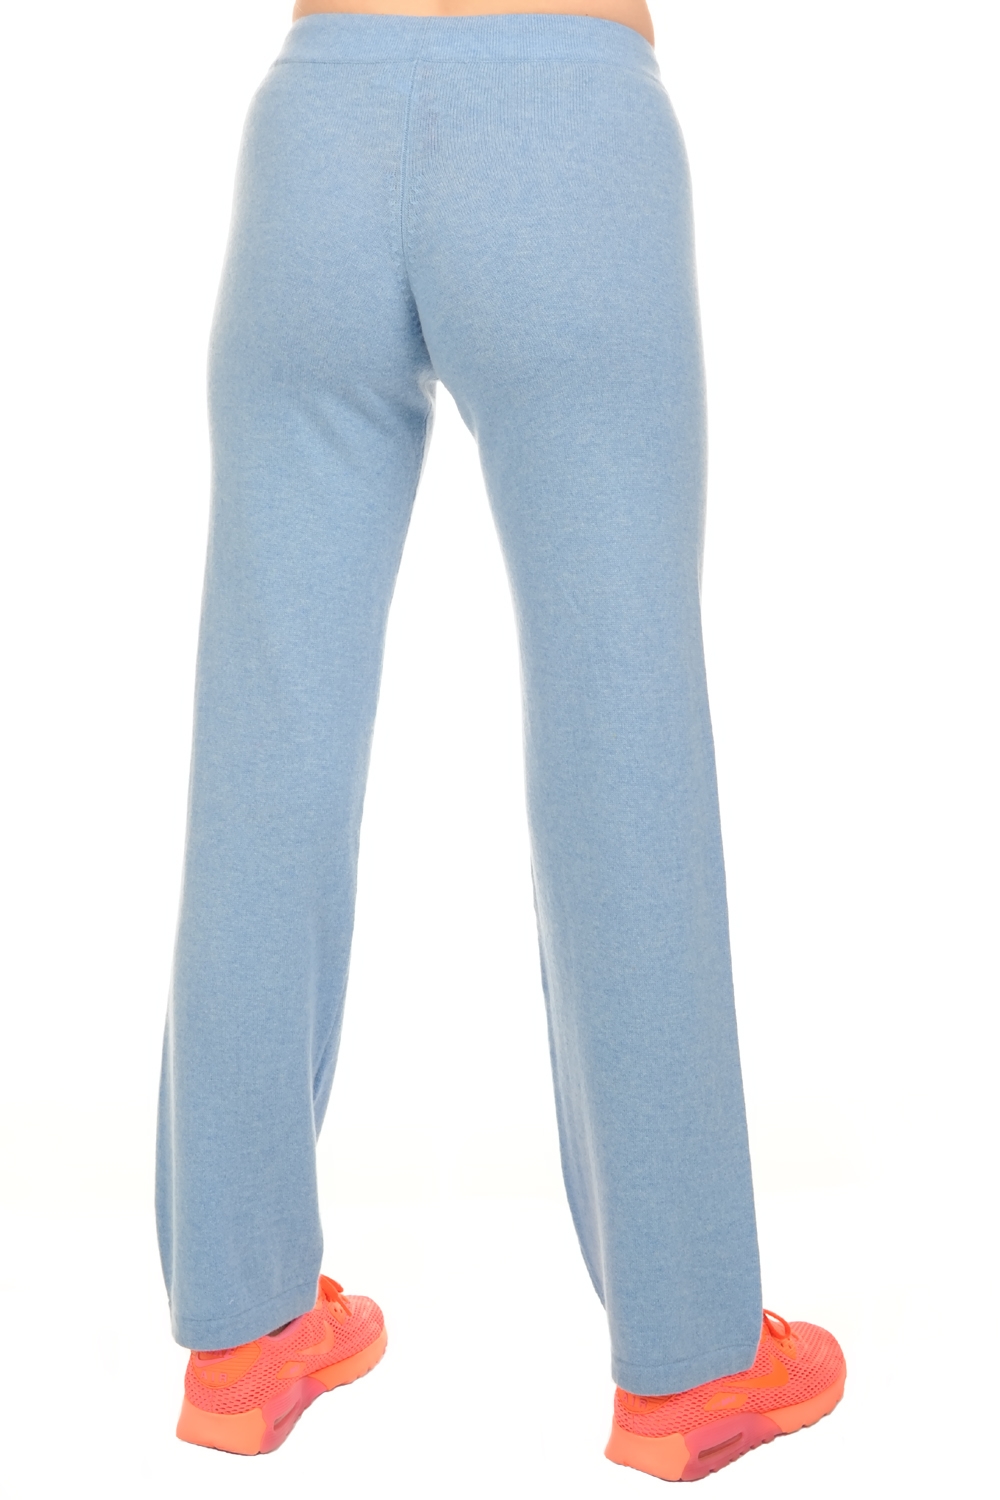 Cachemire pantalon legging femme malice bleu azur chine 4xl